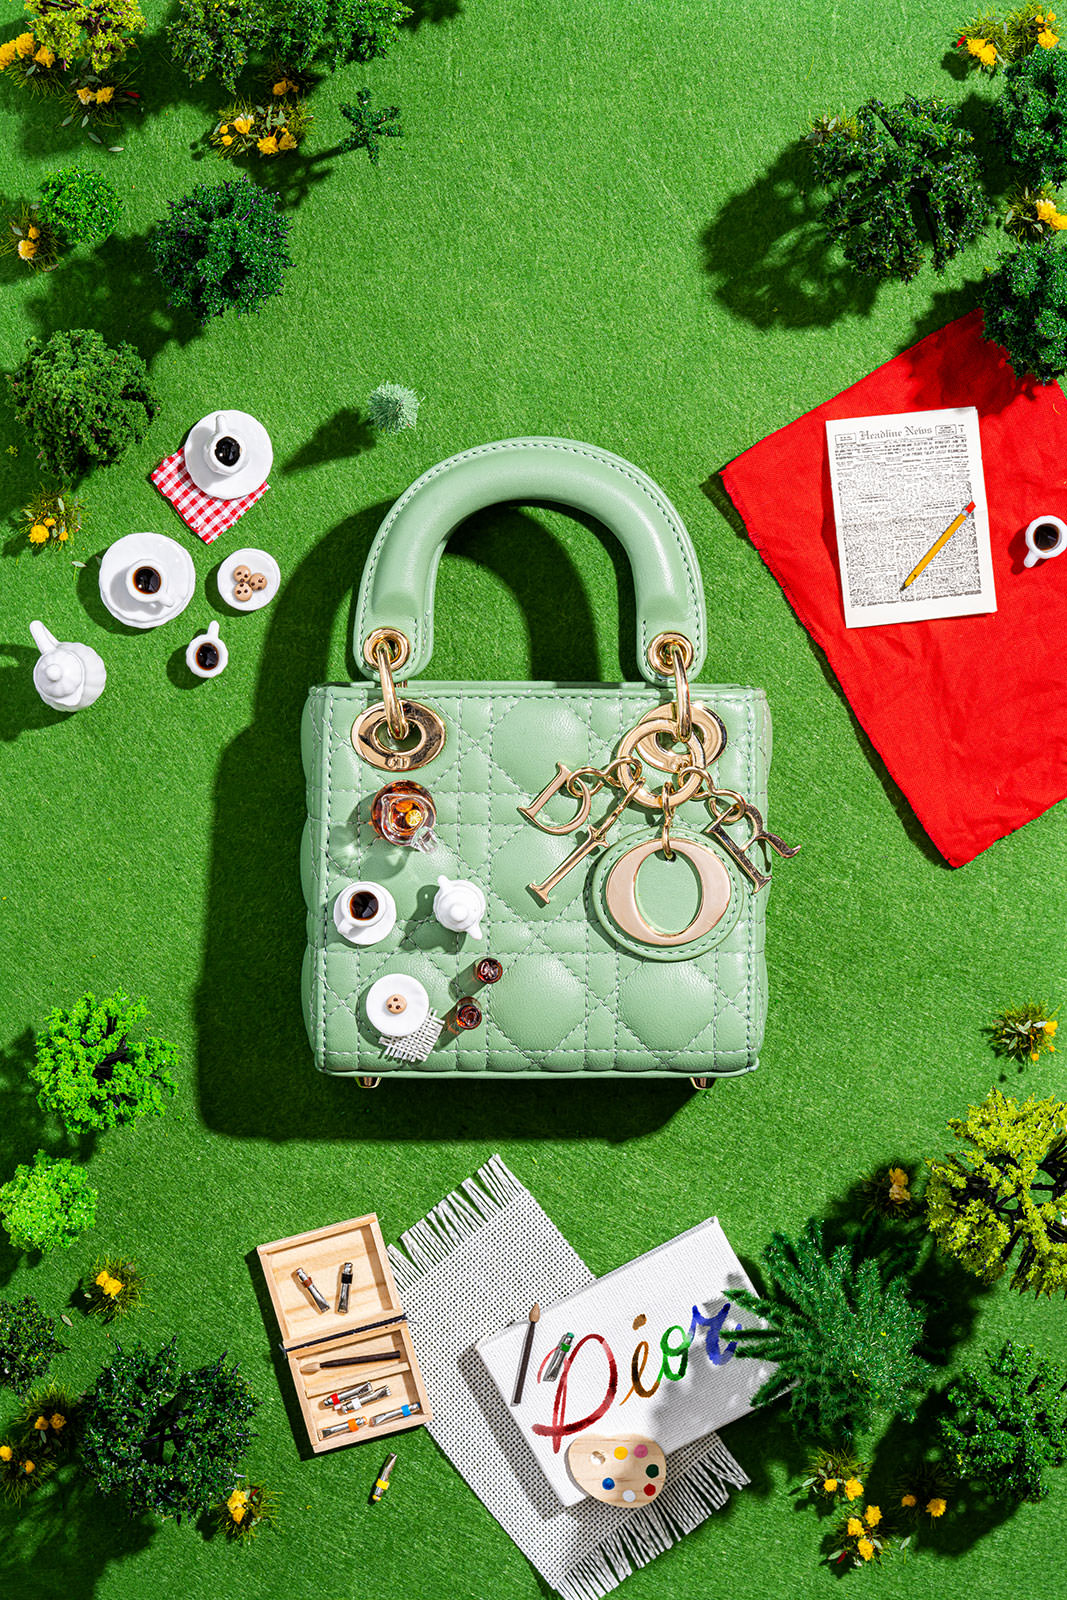 Christian Dior Micro Lady Dior Handbag